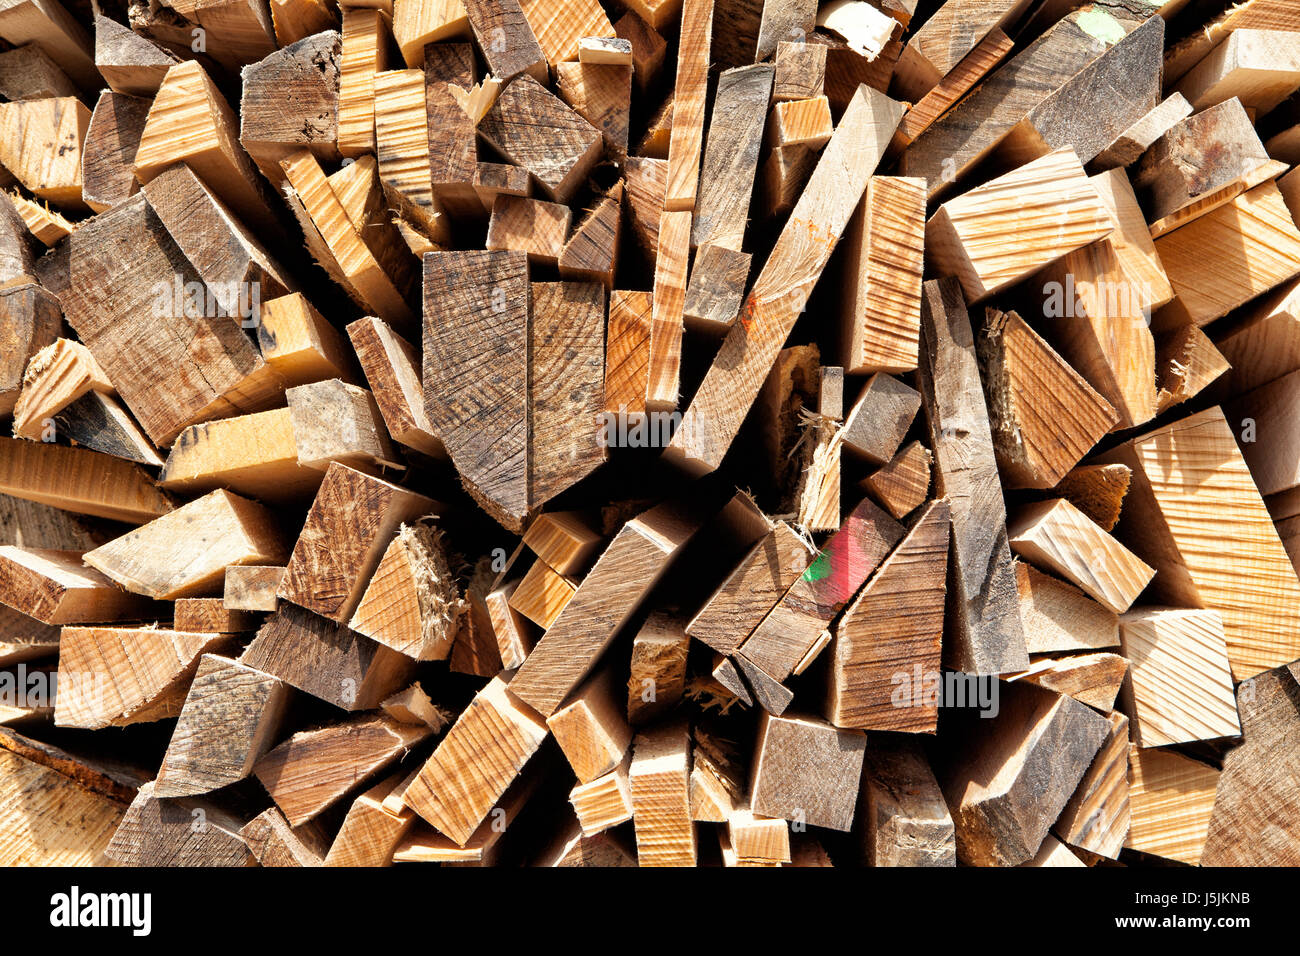 Pile of beech wood, Germany Stock Photo